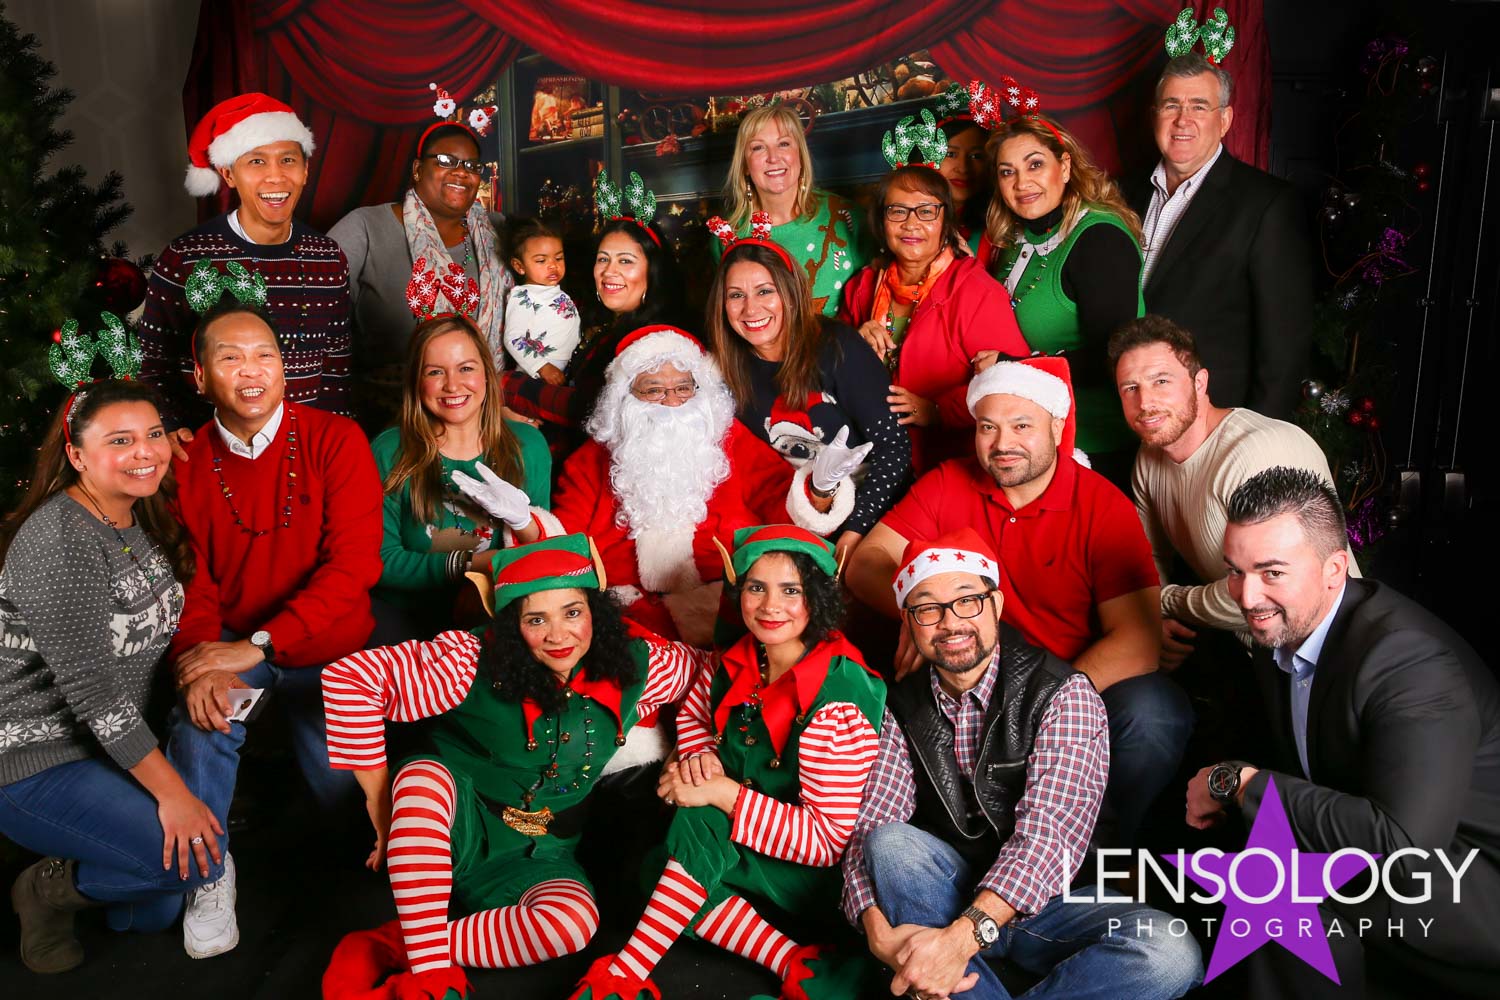 LENSOLOGY.NET - Sheraton Hotels Christmas Santa Shoot, LA, CA.
All images are copyright of Lensology.net
Email: info@lensology.net
www.lensology.net